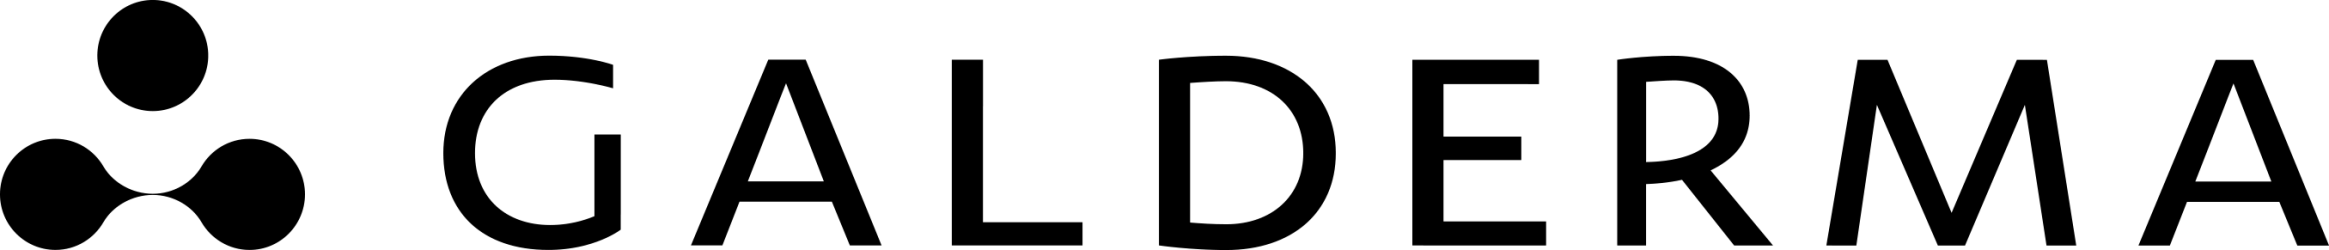 Galderma_logo